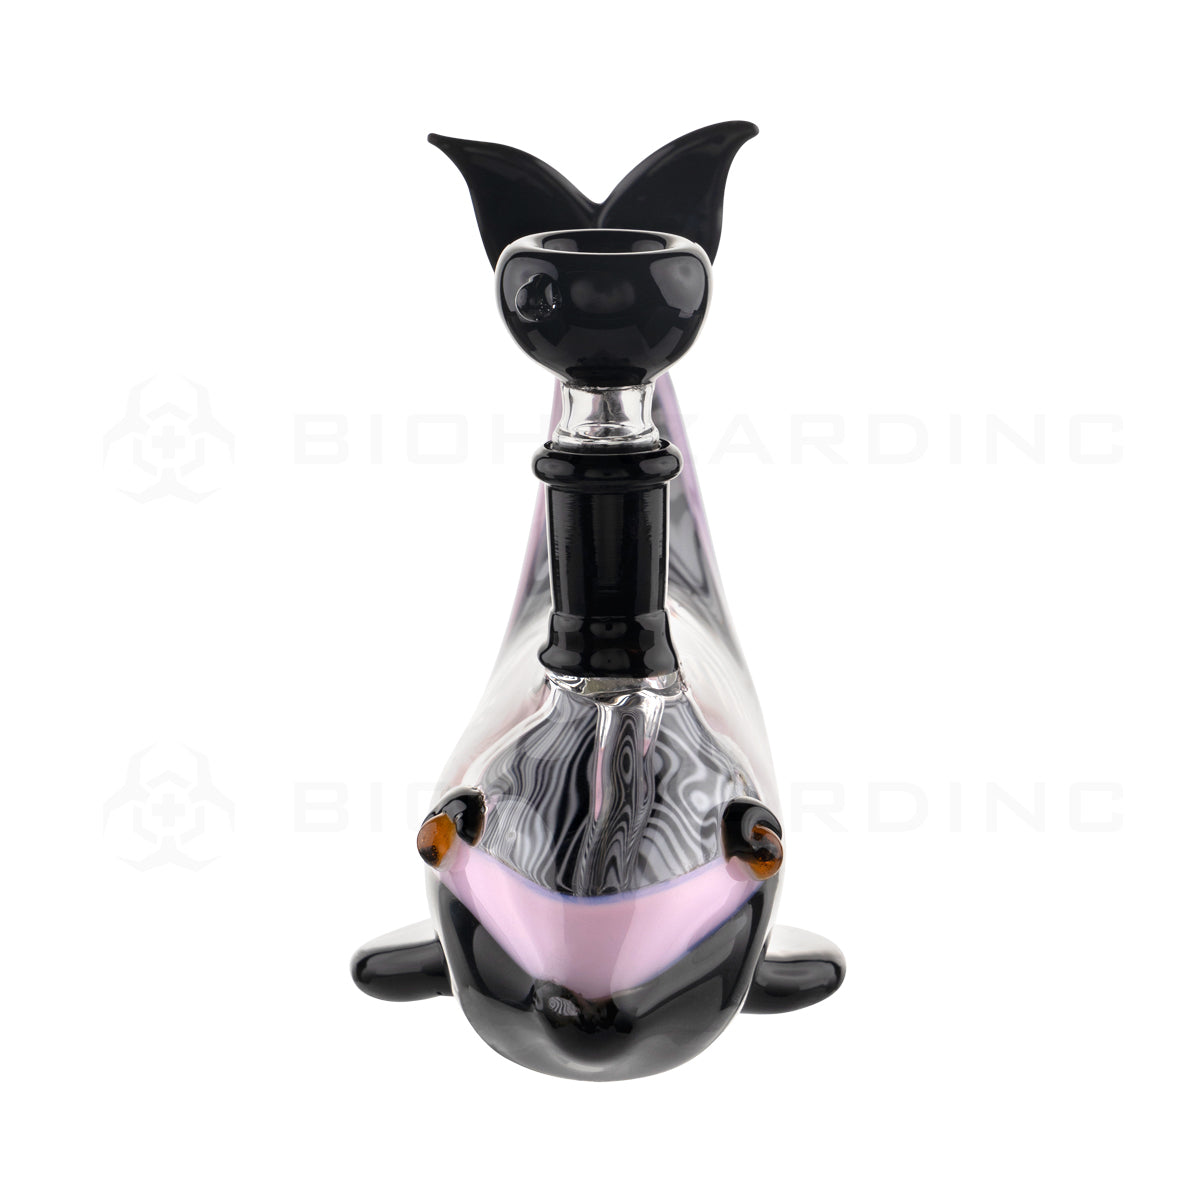 Novelty| Dolphin Glass Hand pipe| 6"- Glass - Black Novelty Hand Pipe Biohazard Inc   